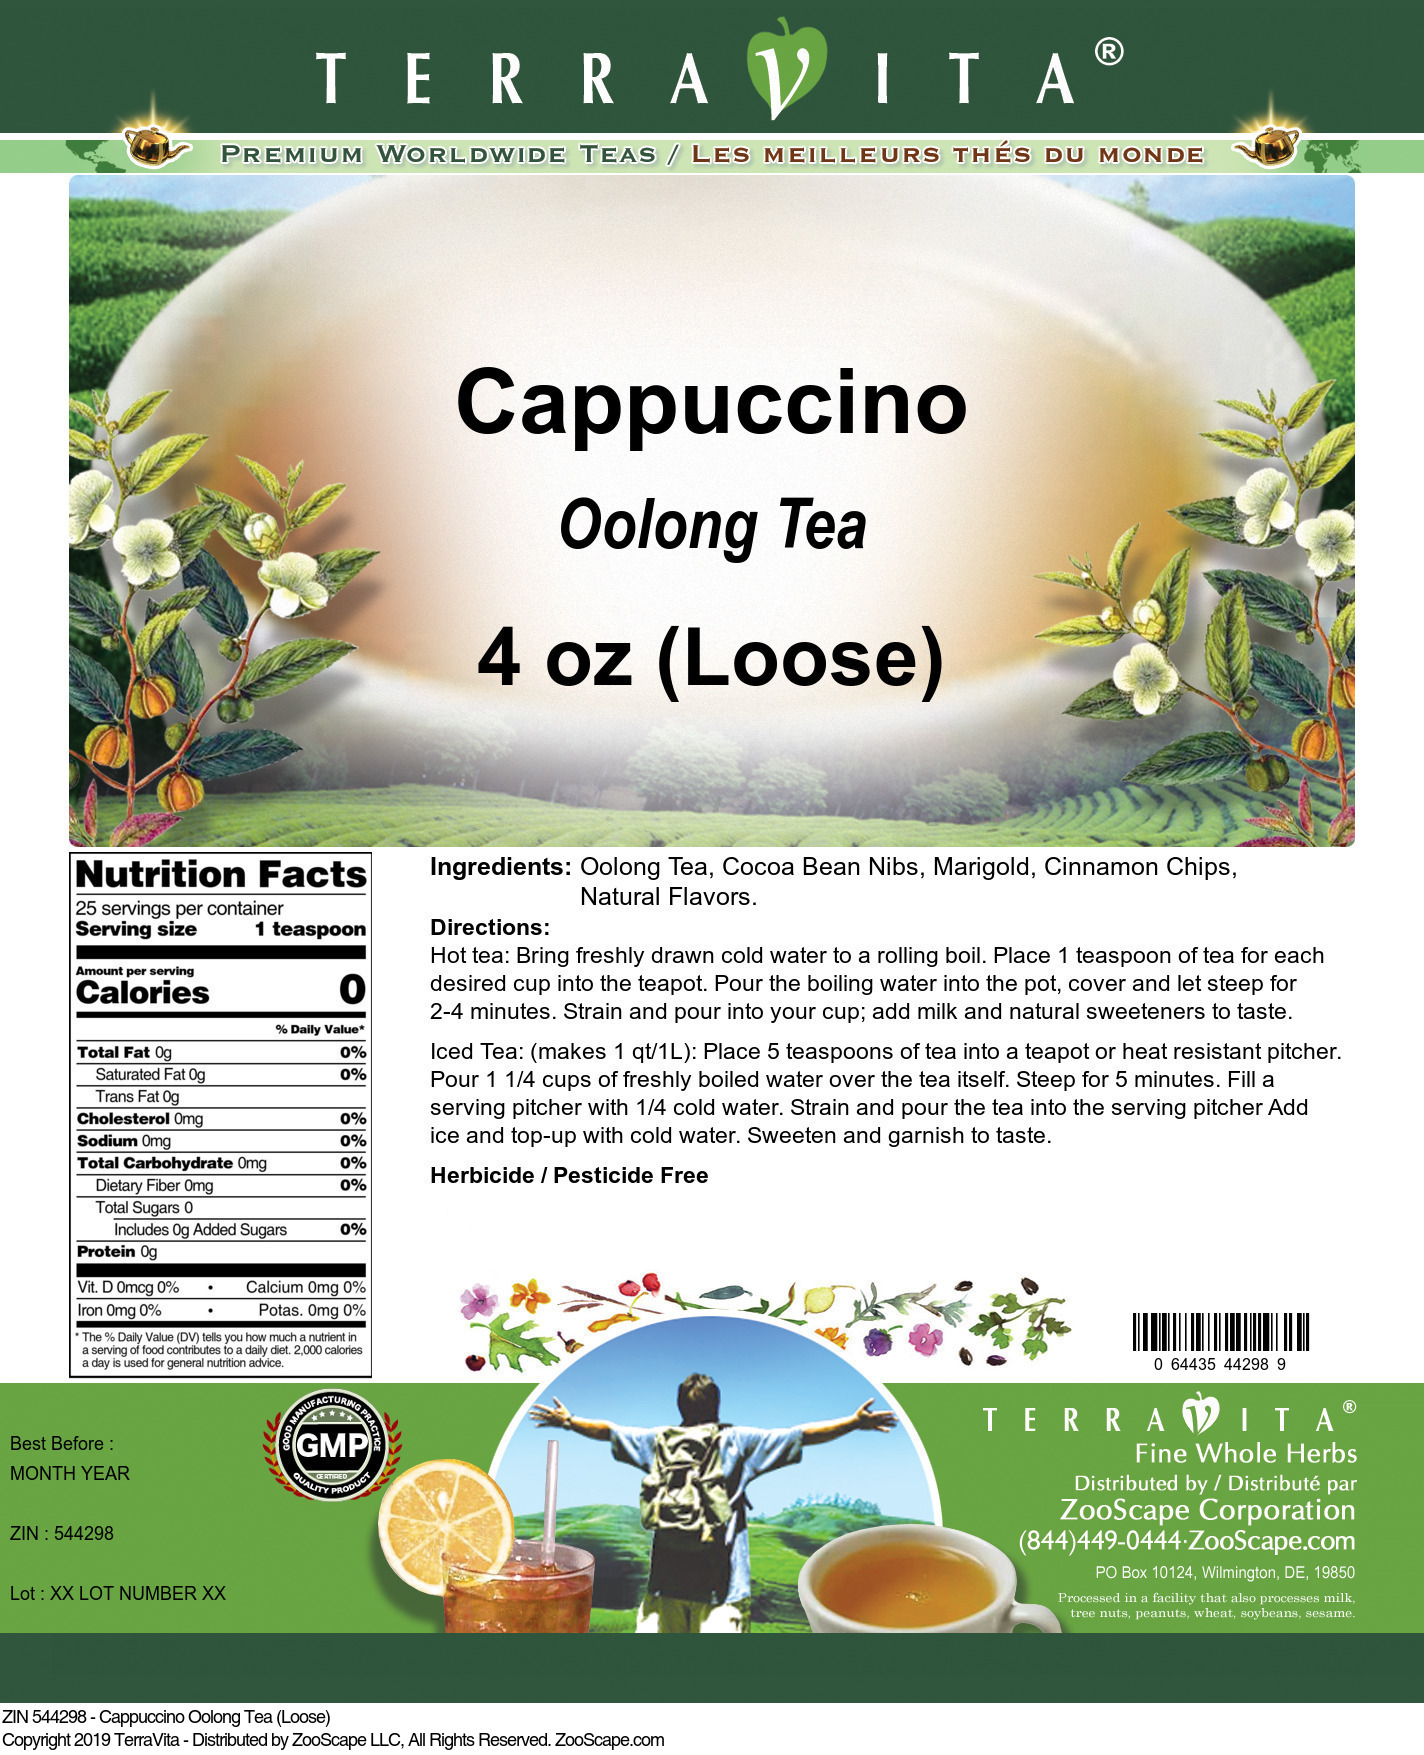 Cappuccino Oolong Tea (Loose) - Label